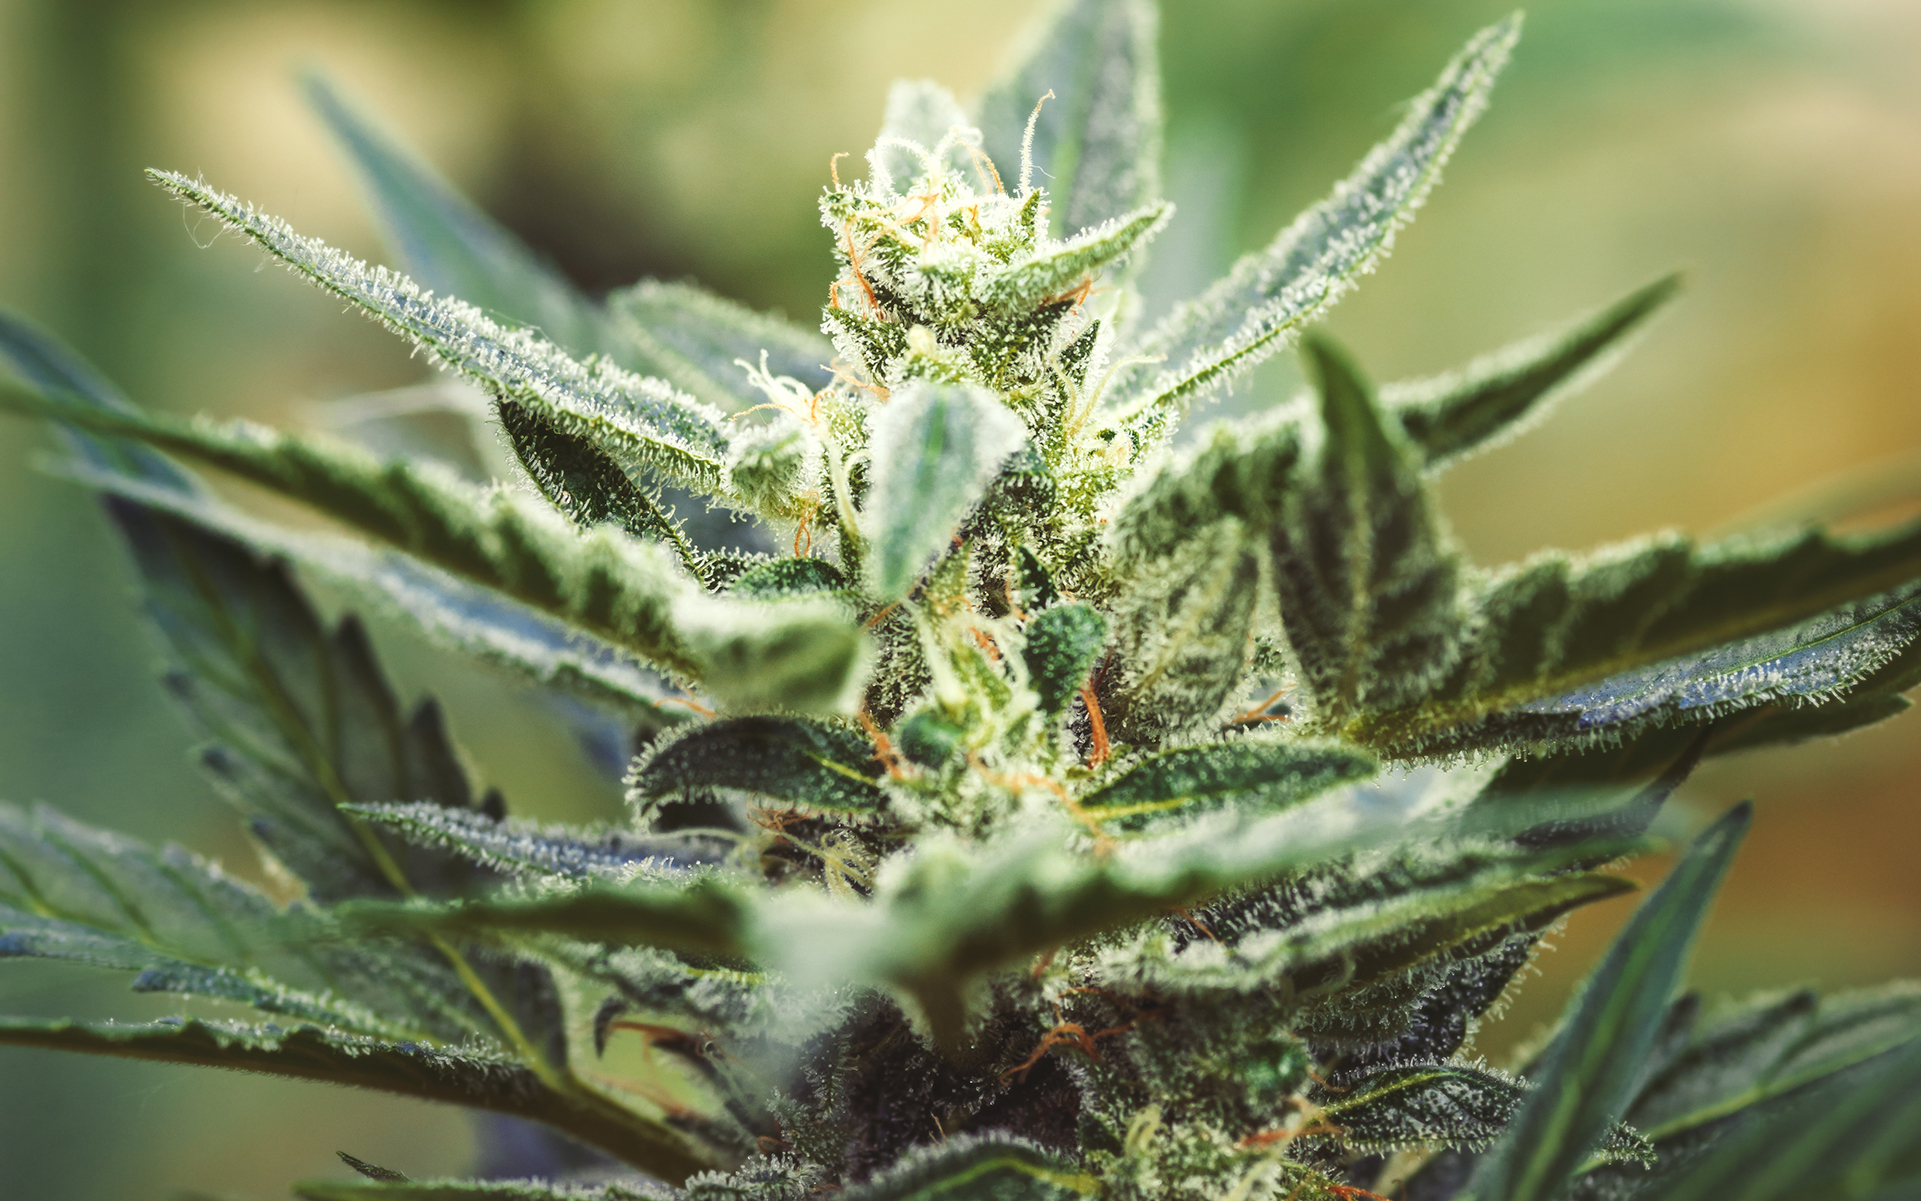 Louis XIII Strain - Hybrid Cannabis Video Review : Hytiva